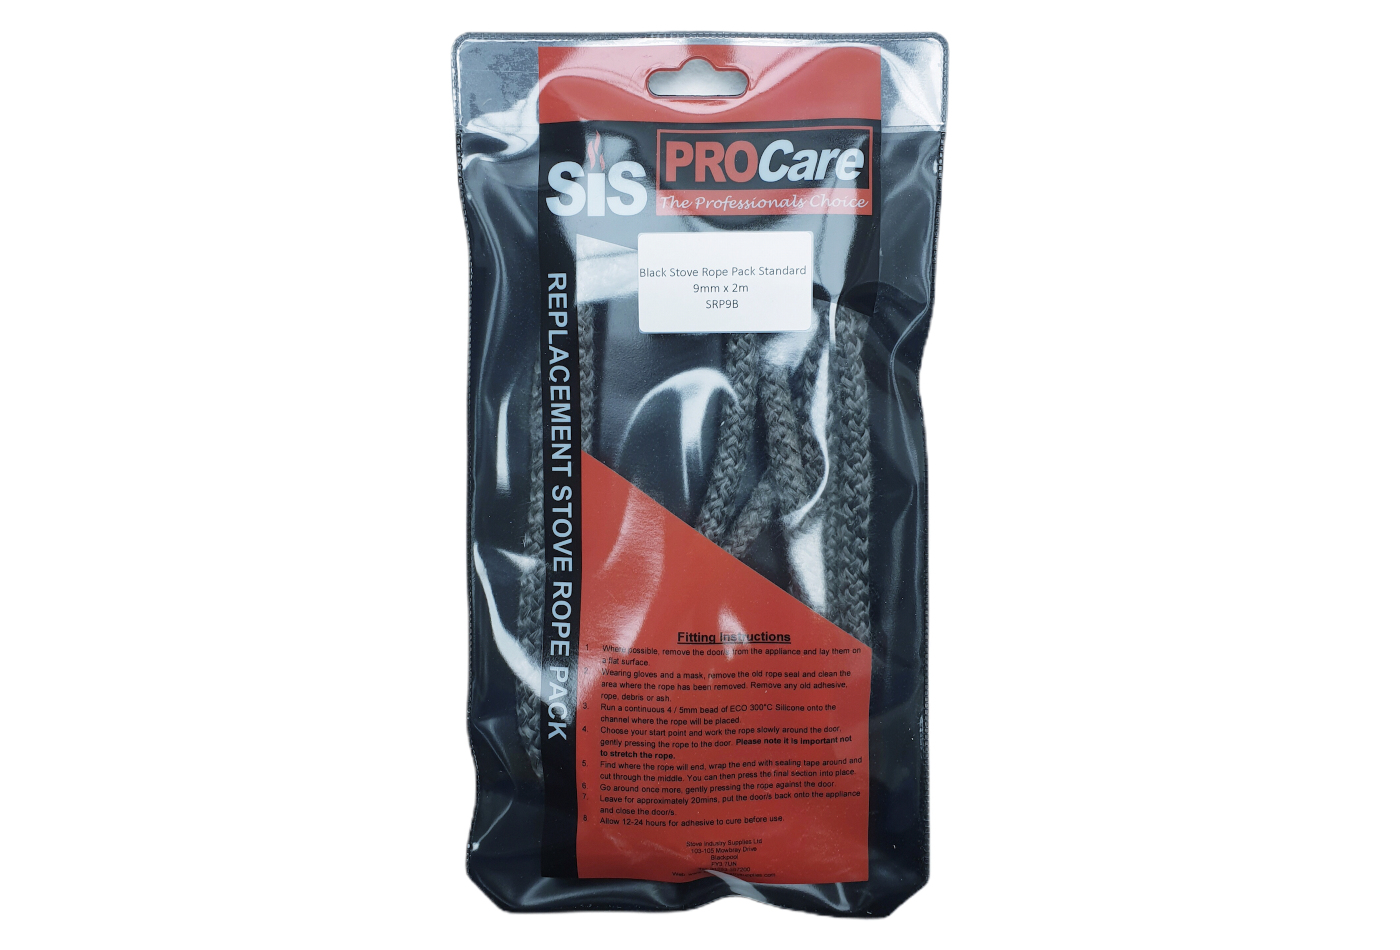 SiS Procare Black 9 milimetre x 2 metre Standard Stove Rope Pack - product code SRP9B